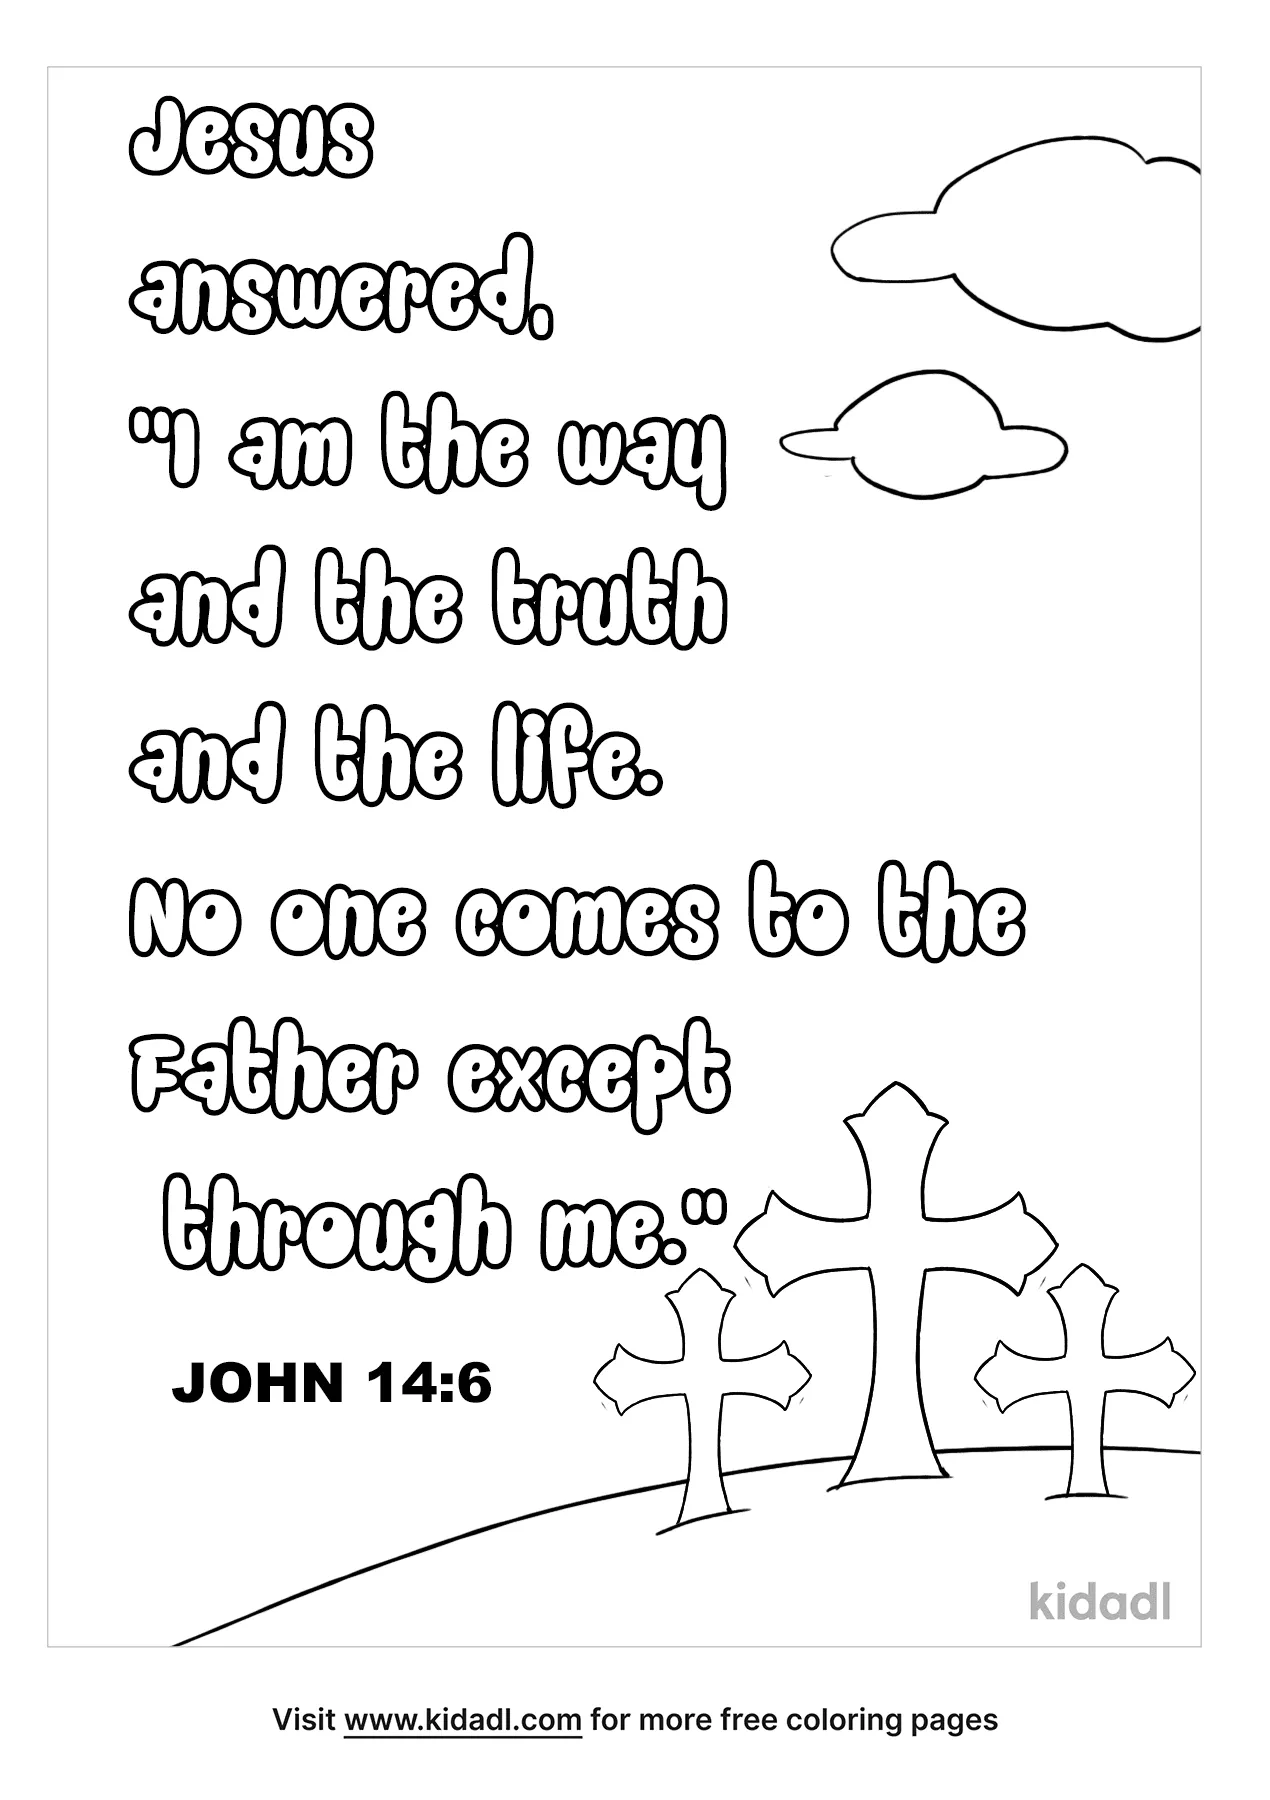 John 14:6 Coloring Page